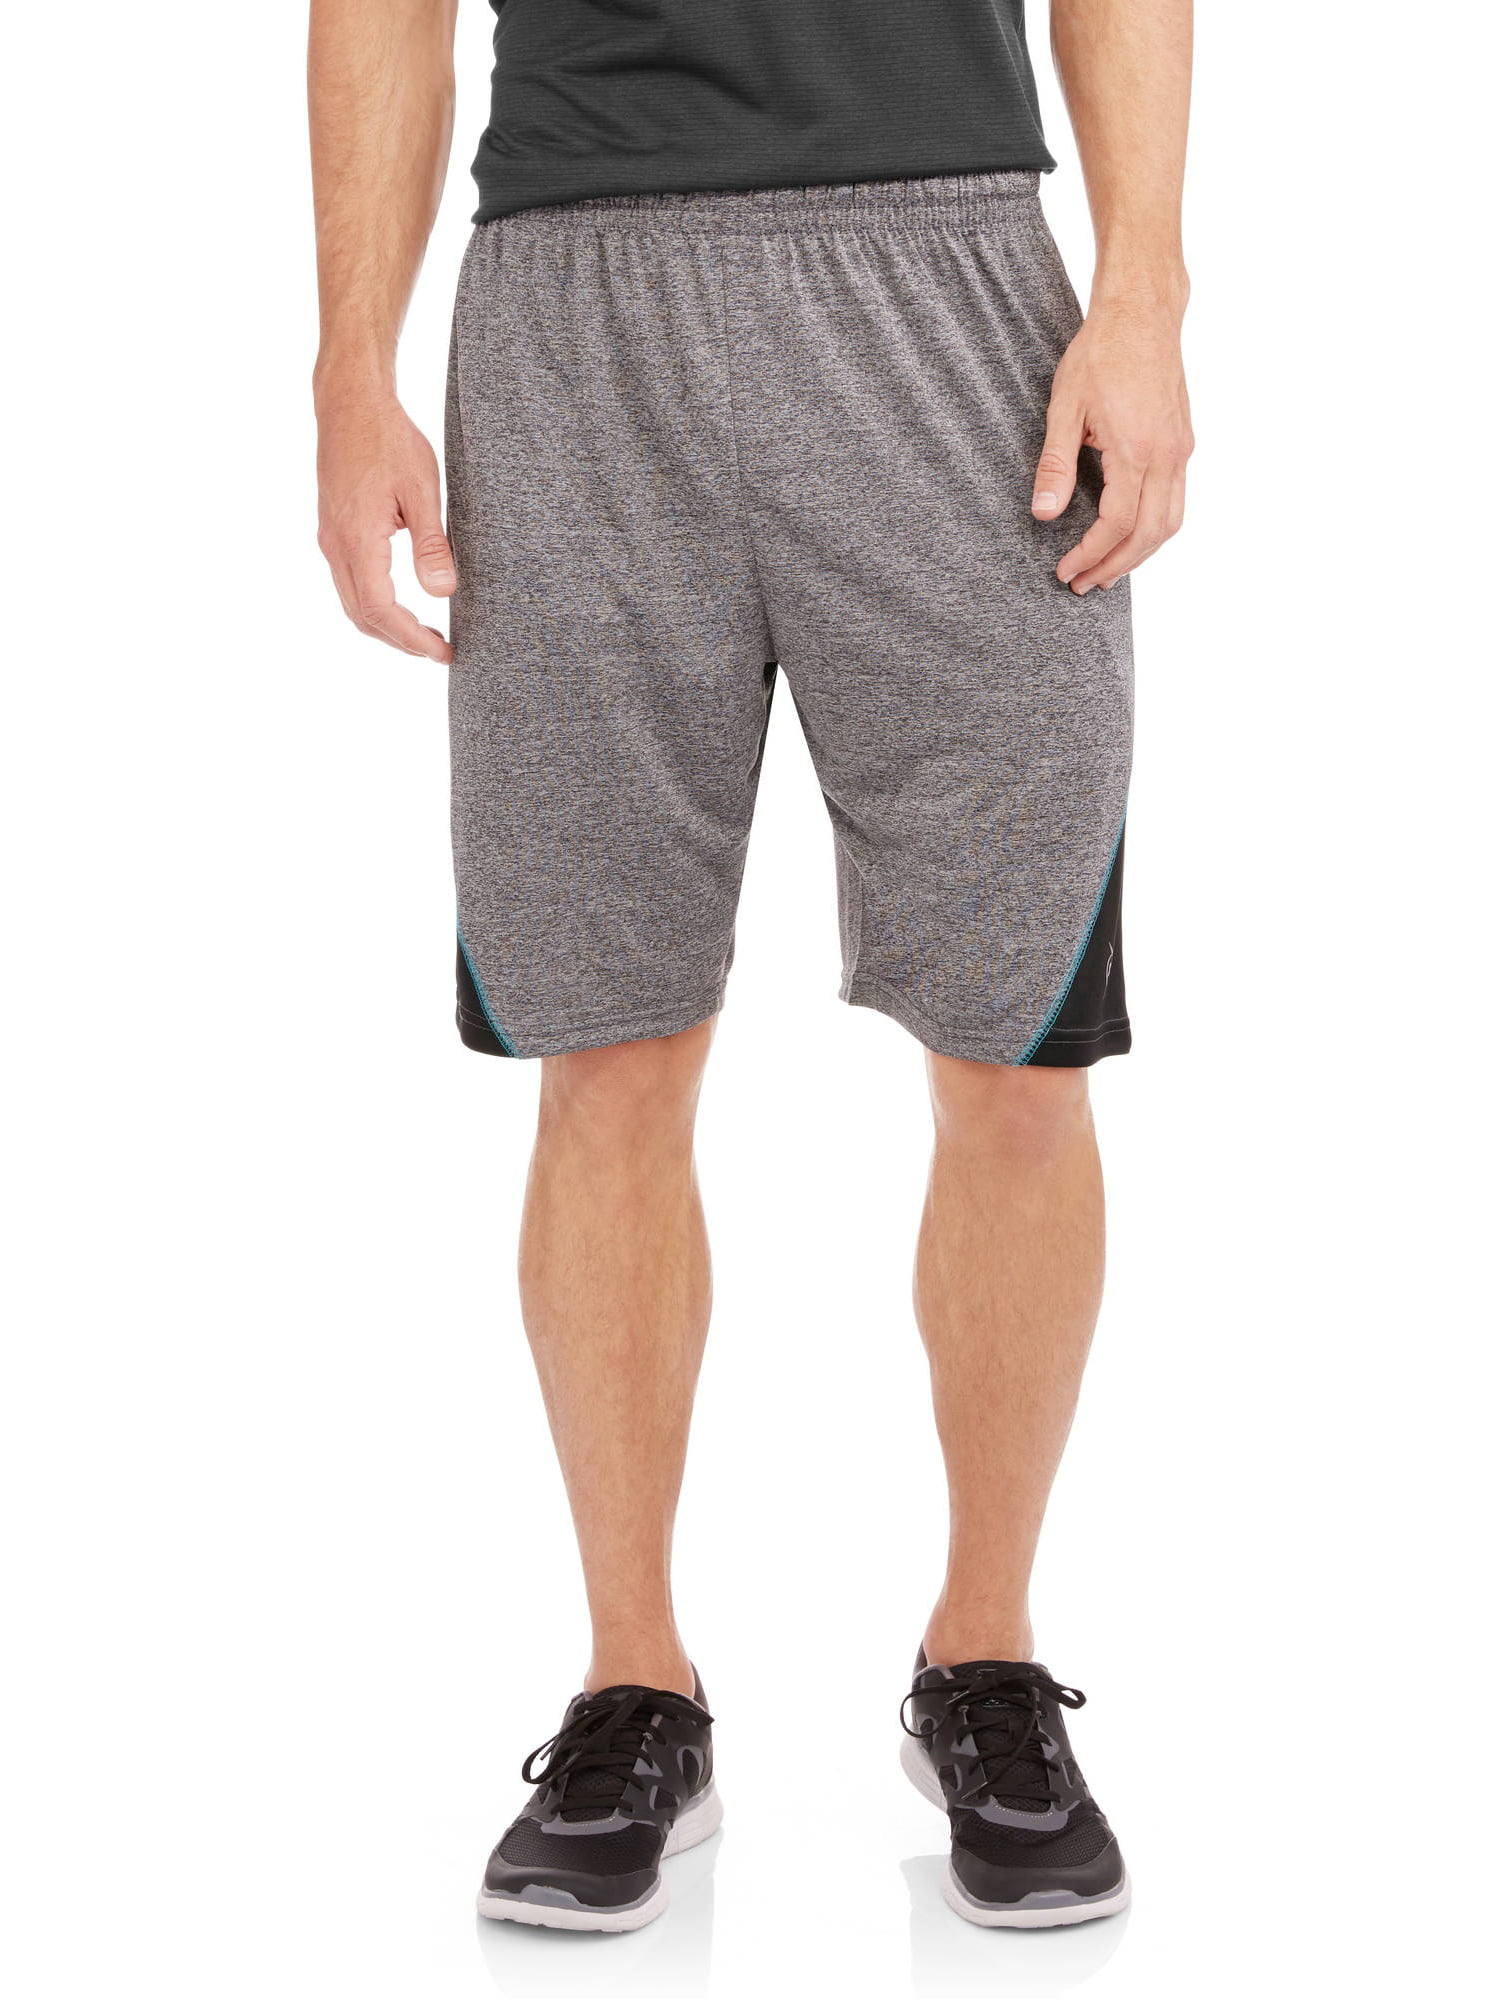 2019 Polyester Shorts for Men Summer Breathable Elastic Waist Casual Man Shorts,Dark Blue K8888,XXXL 